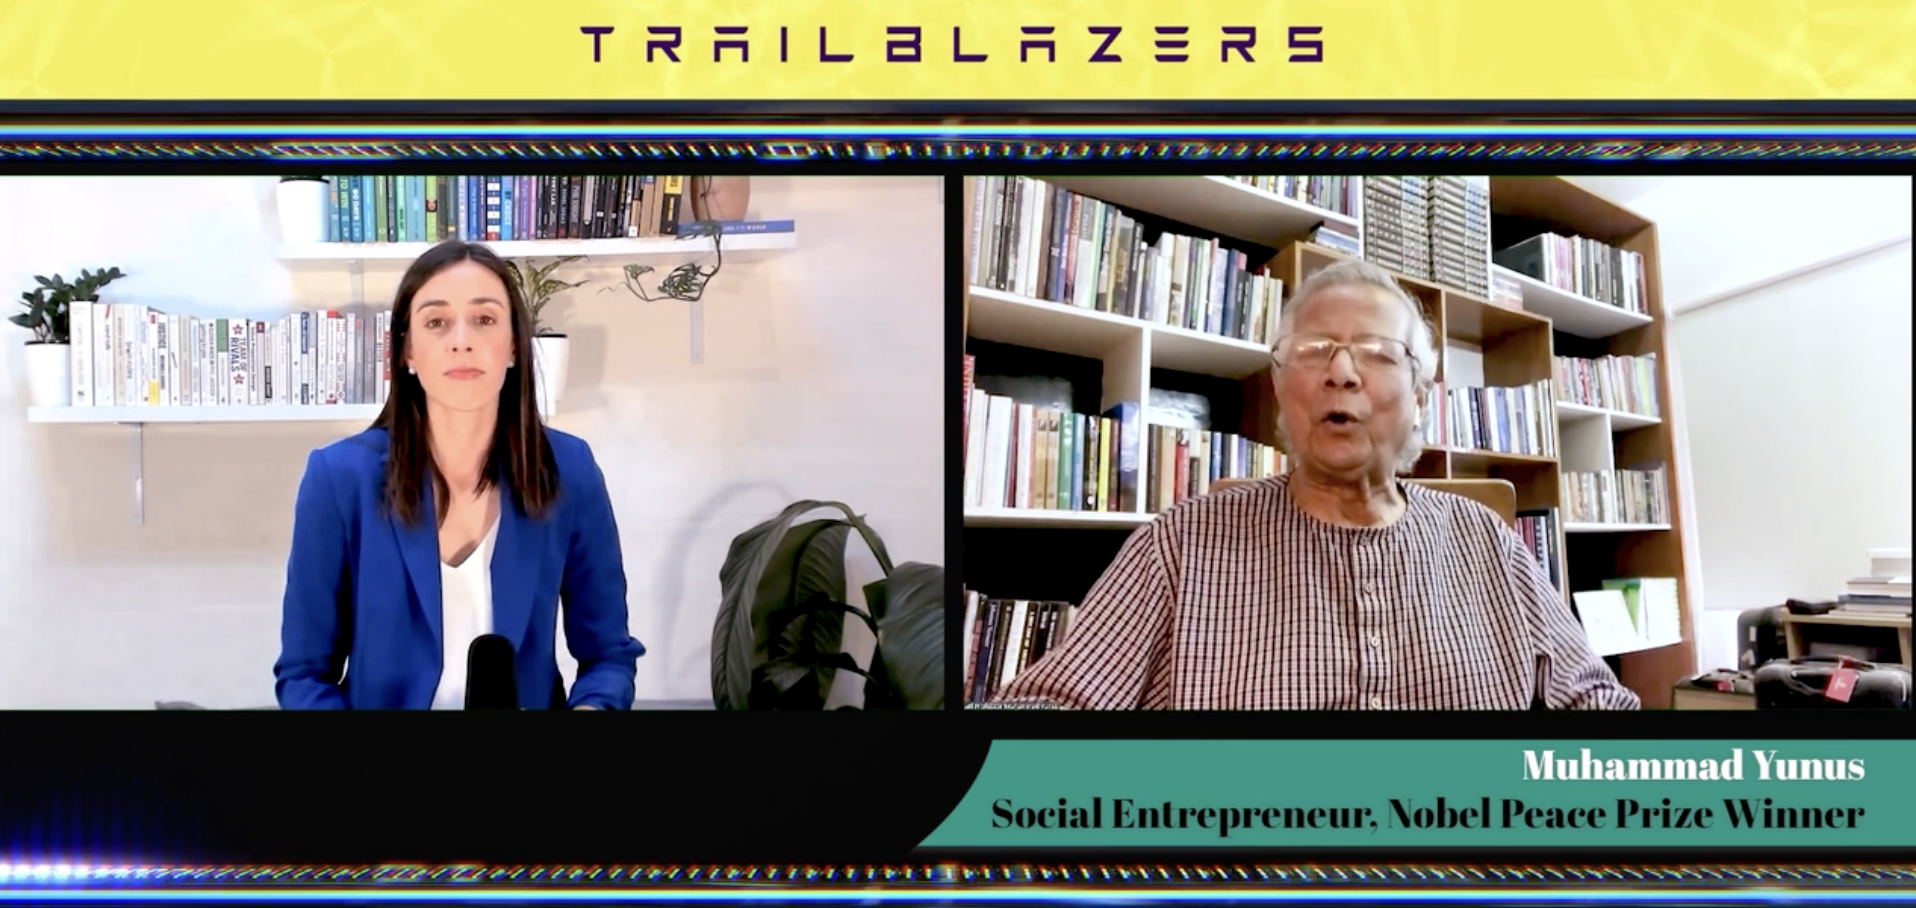 Holly Ransom interviewing Nobel Peace Prize Winner Muhammed Yunus virtually